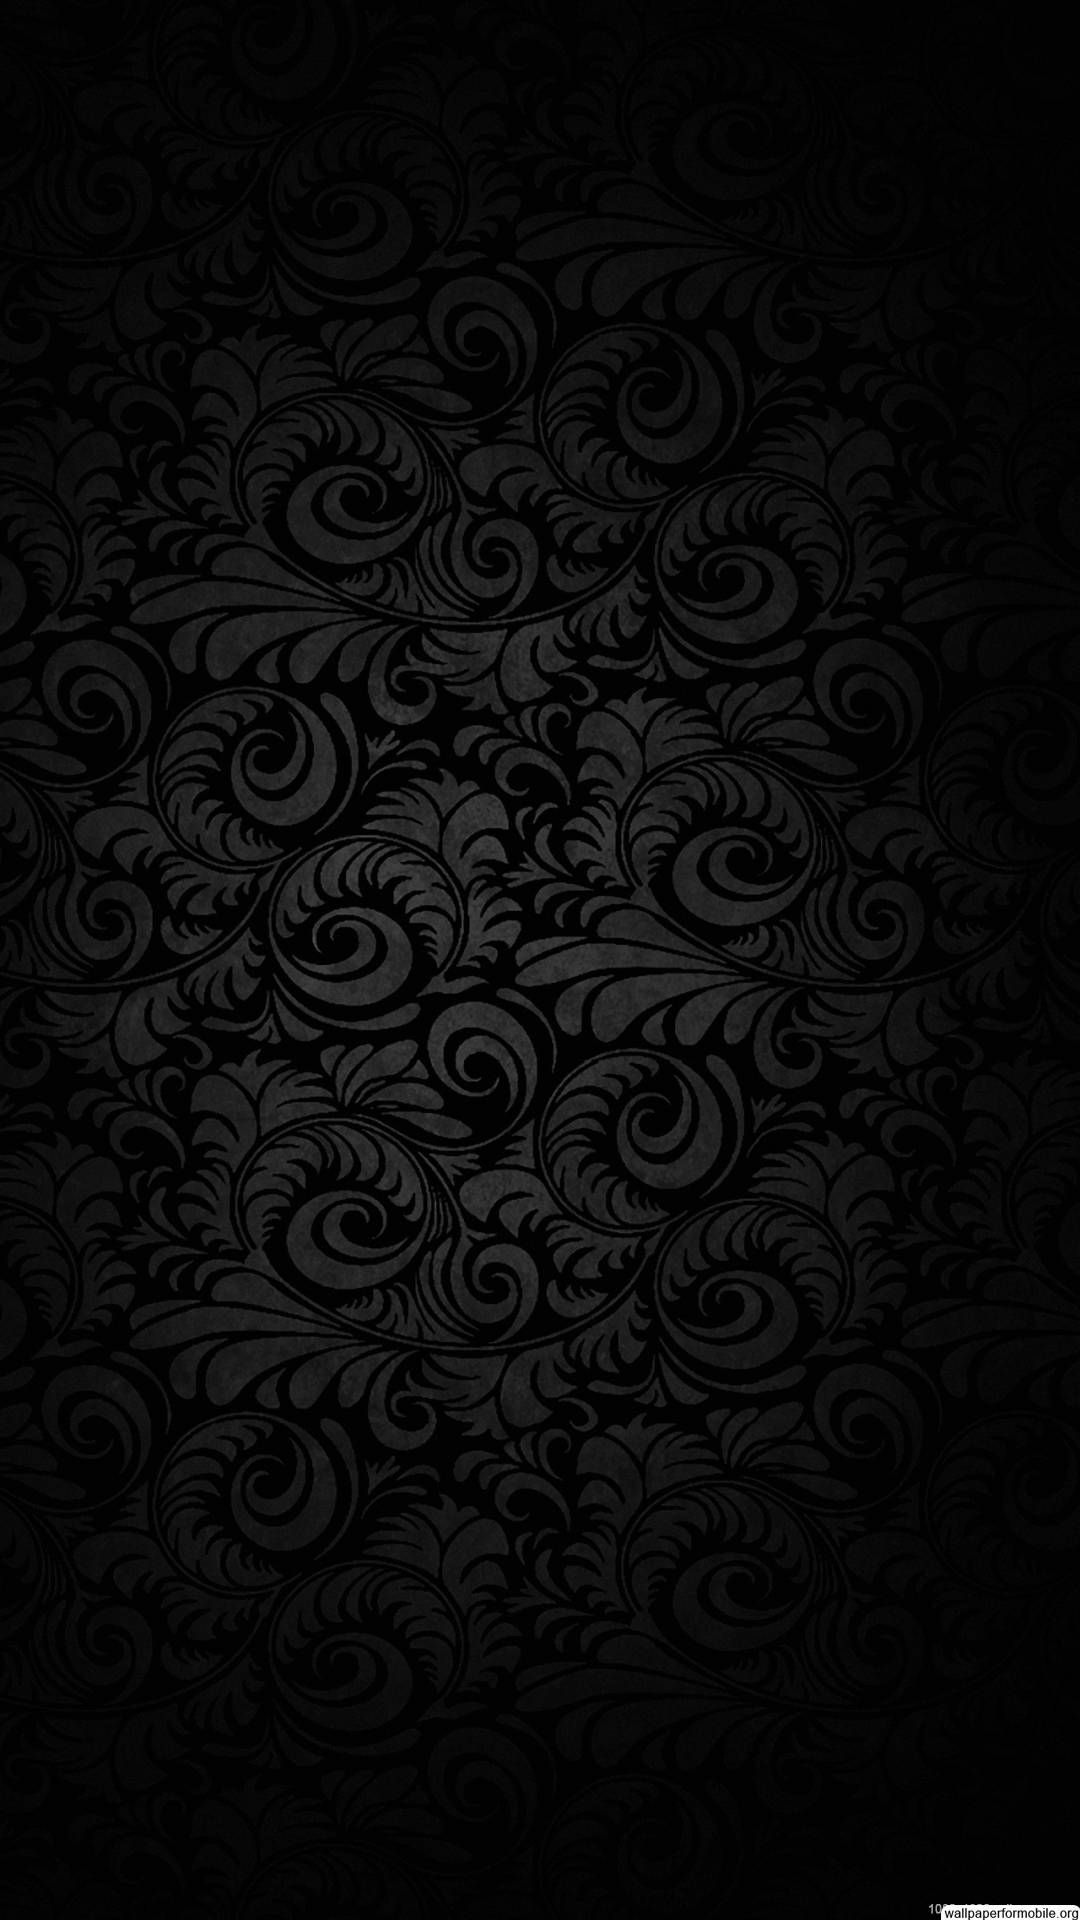 So Ive got this thing for darker wallpaper part Mobile Black HD Wallpaper, Wallpaper iPhone Walp. Dark desktop background, iPhone 5s wallpaper, Dark wallpaper